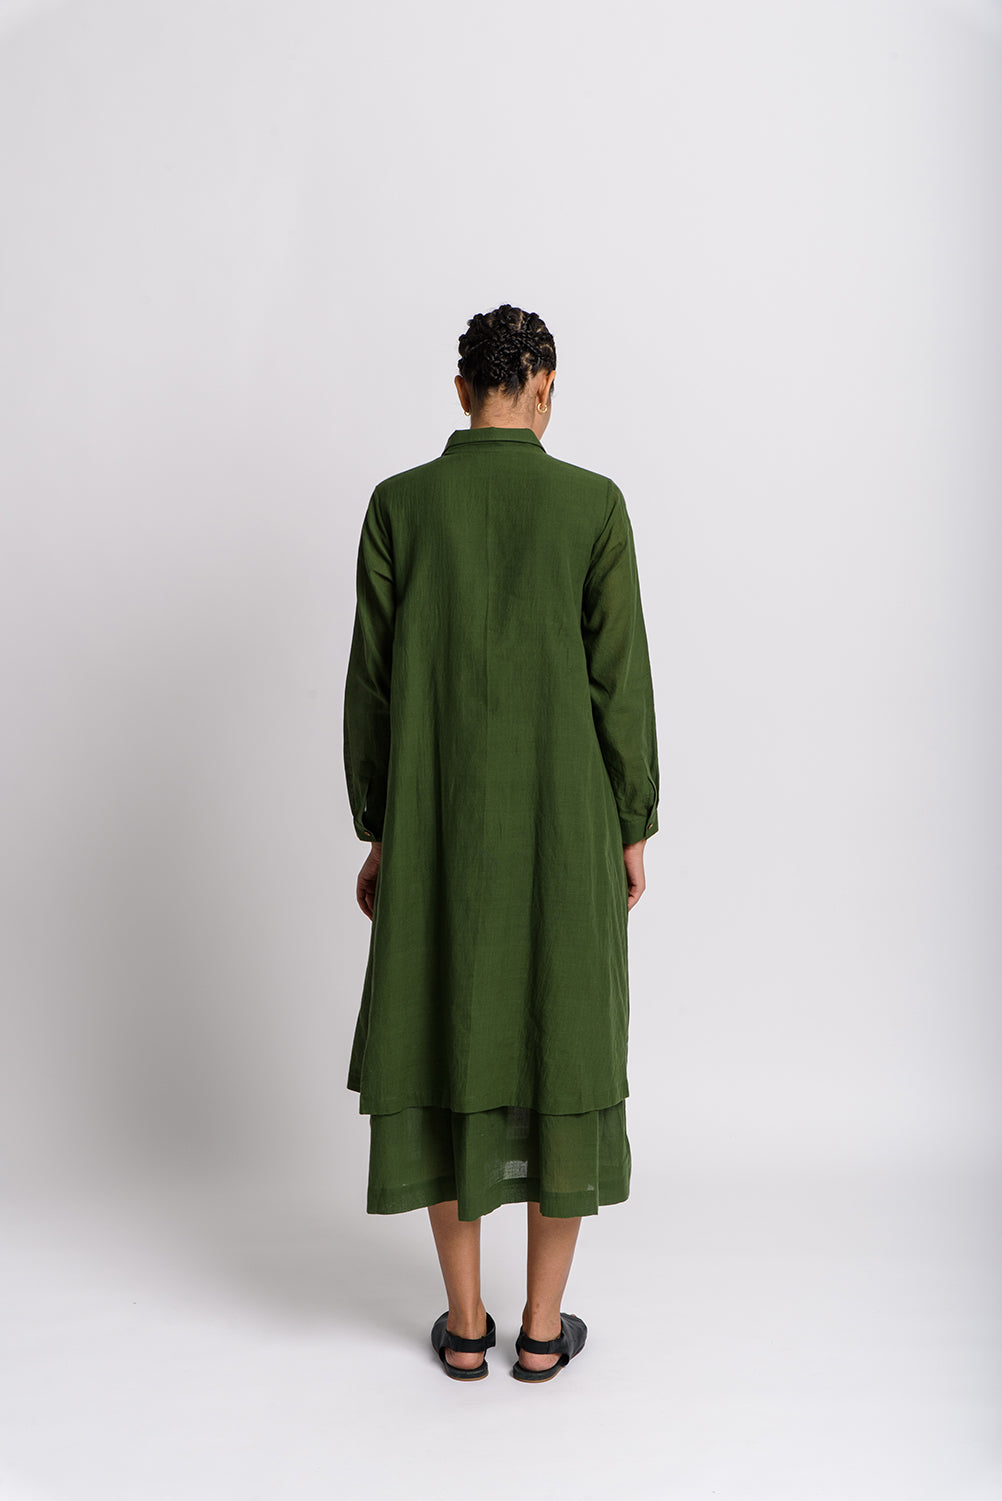 Olive green signature jacket dress